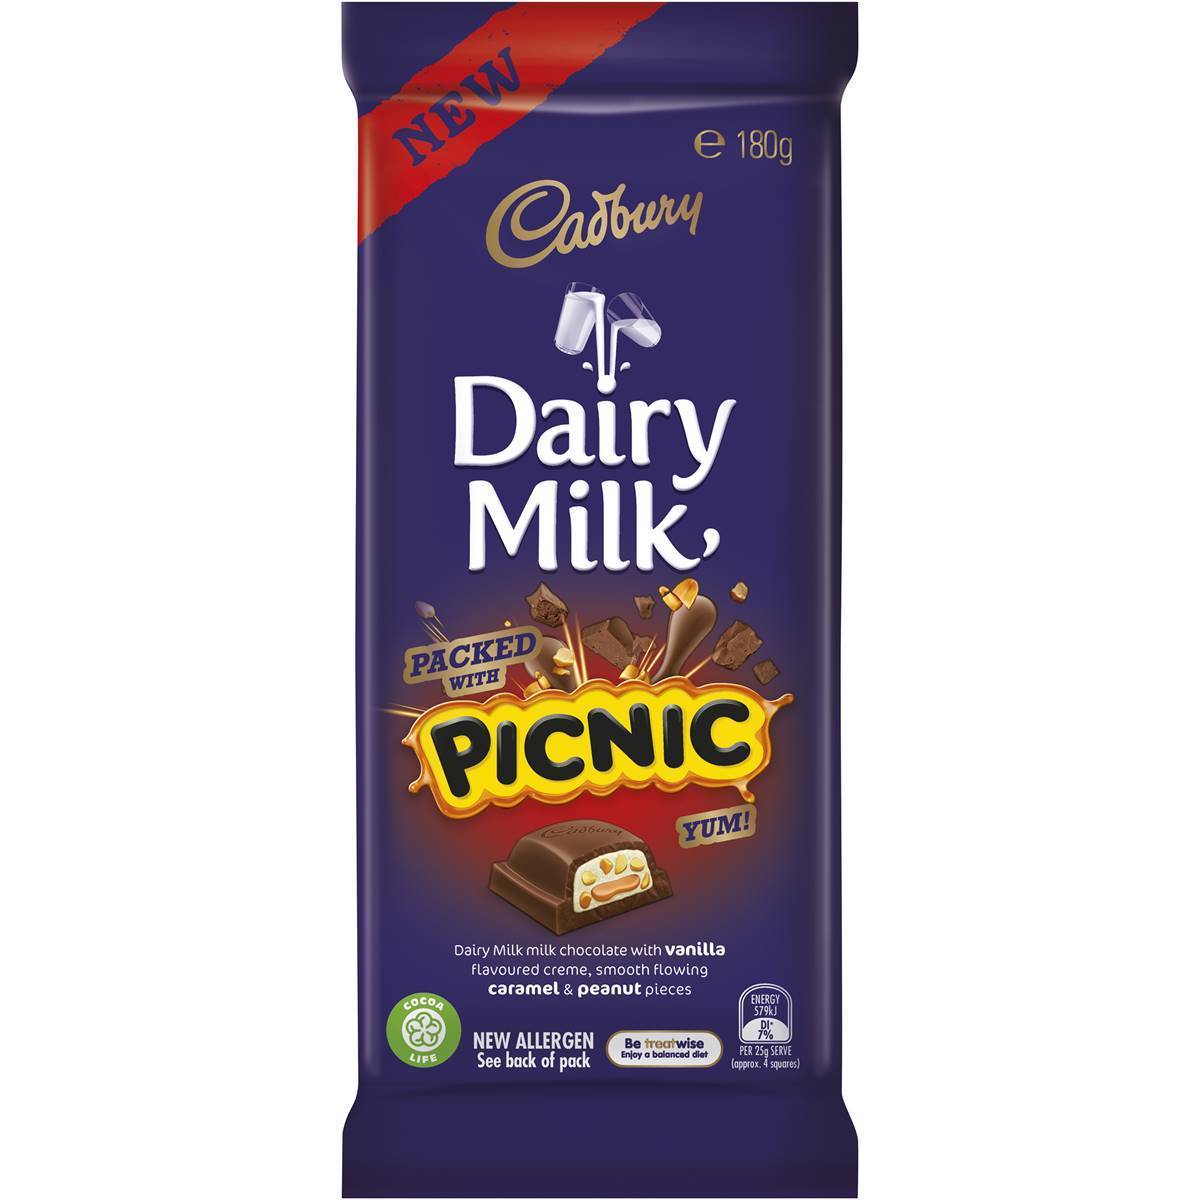 Cadbury Dairy Milk Block With Picnic (170g)